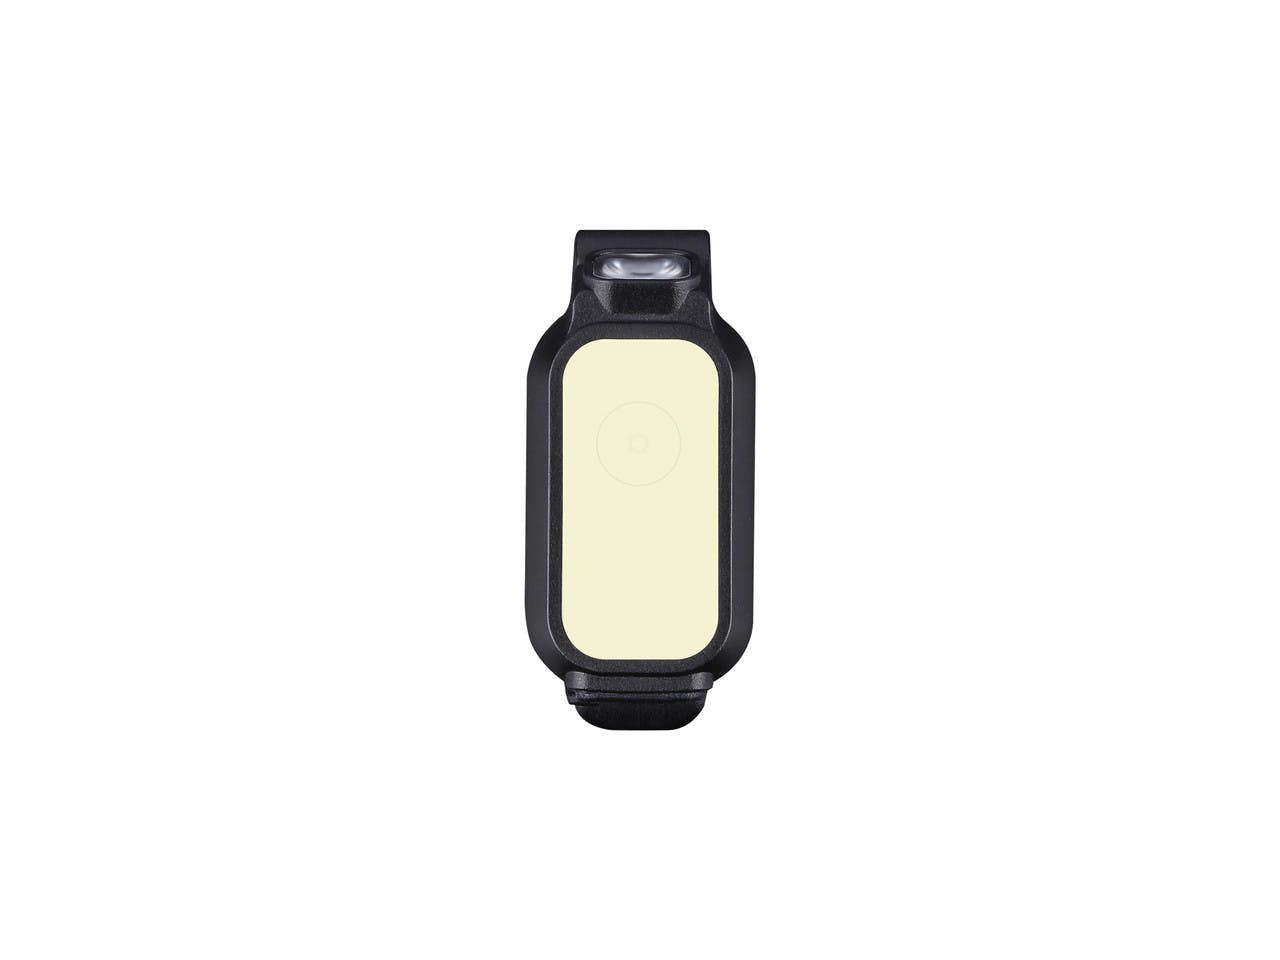 Lampe de poche E-Lite Mini Noir